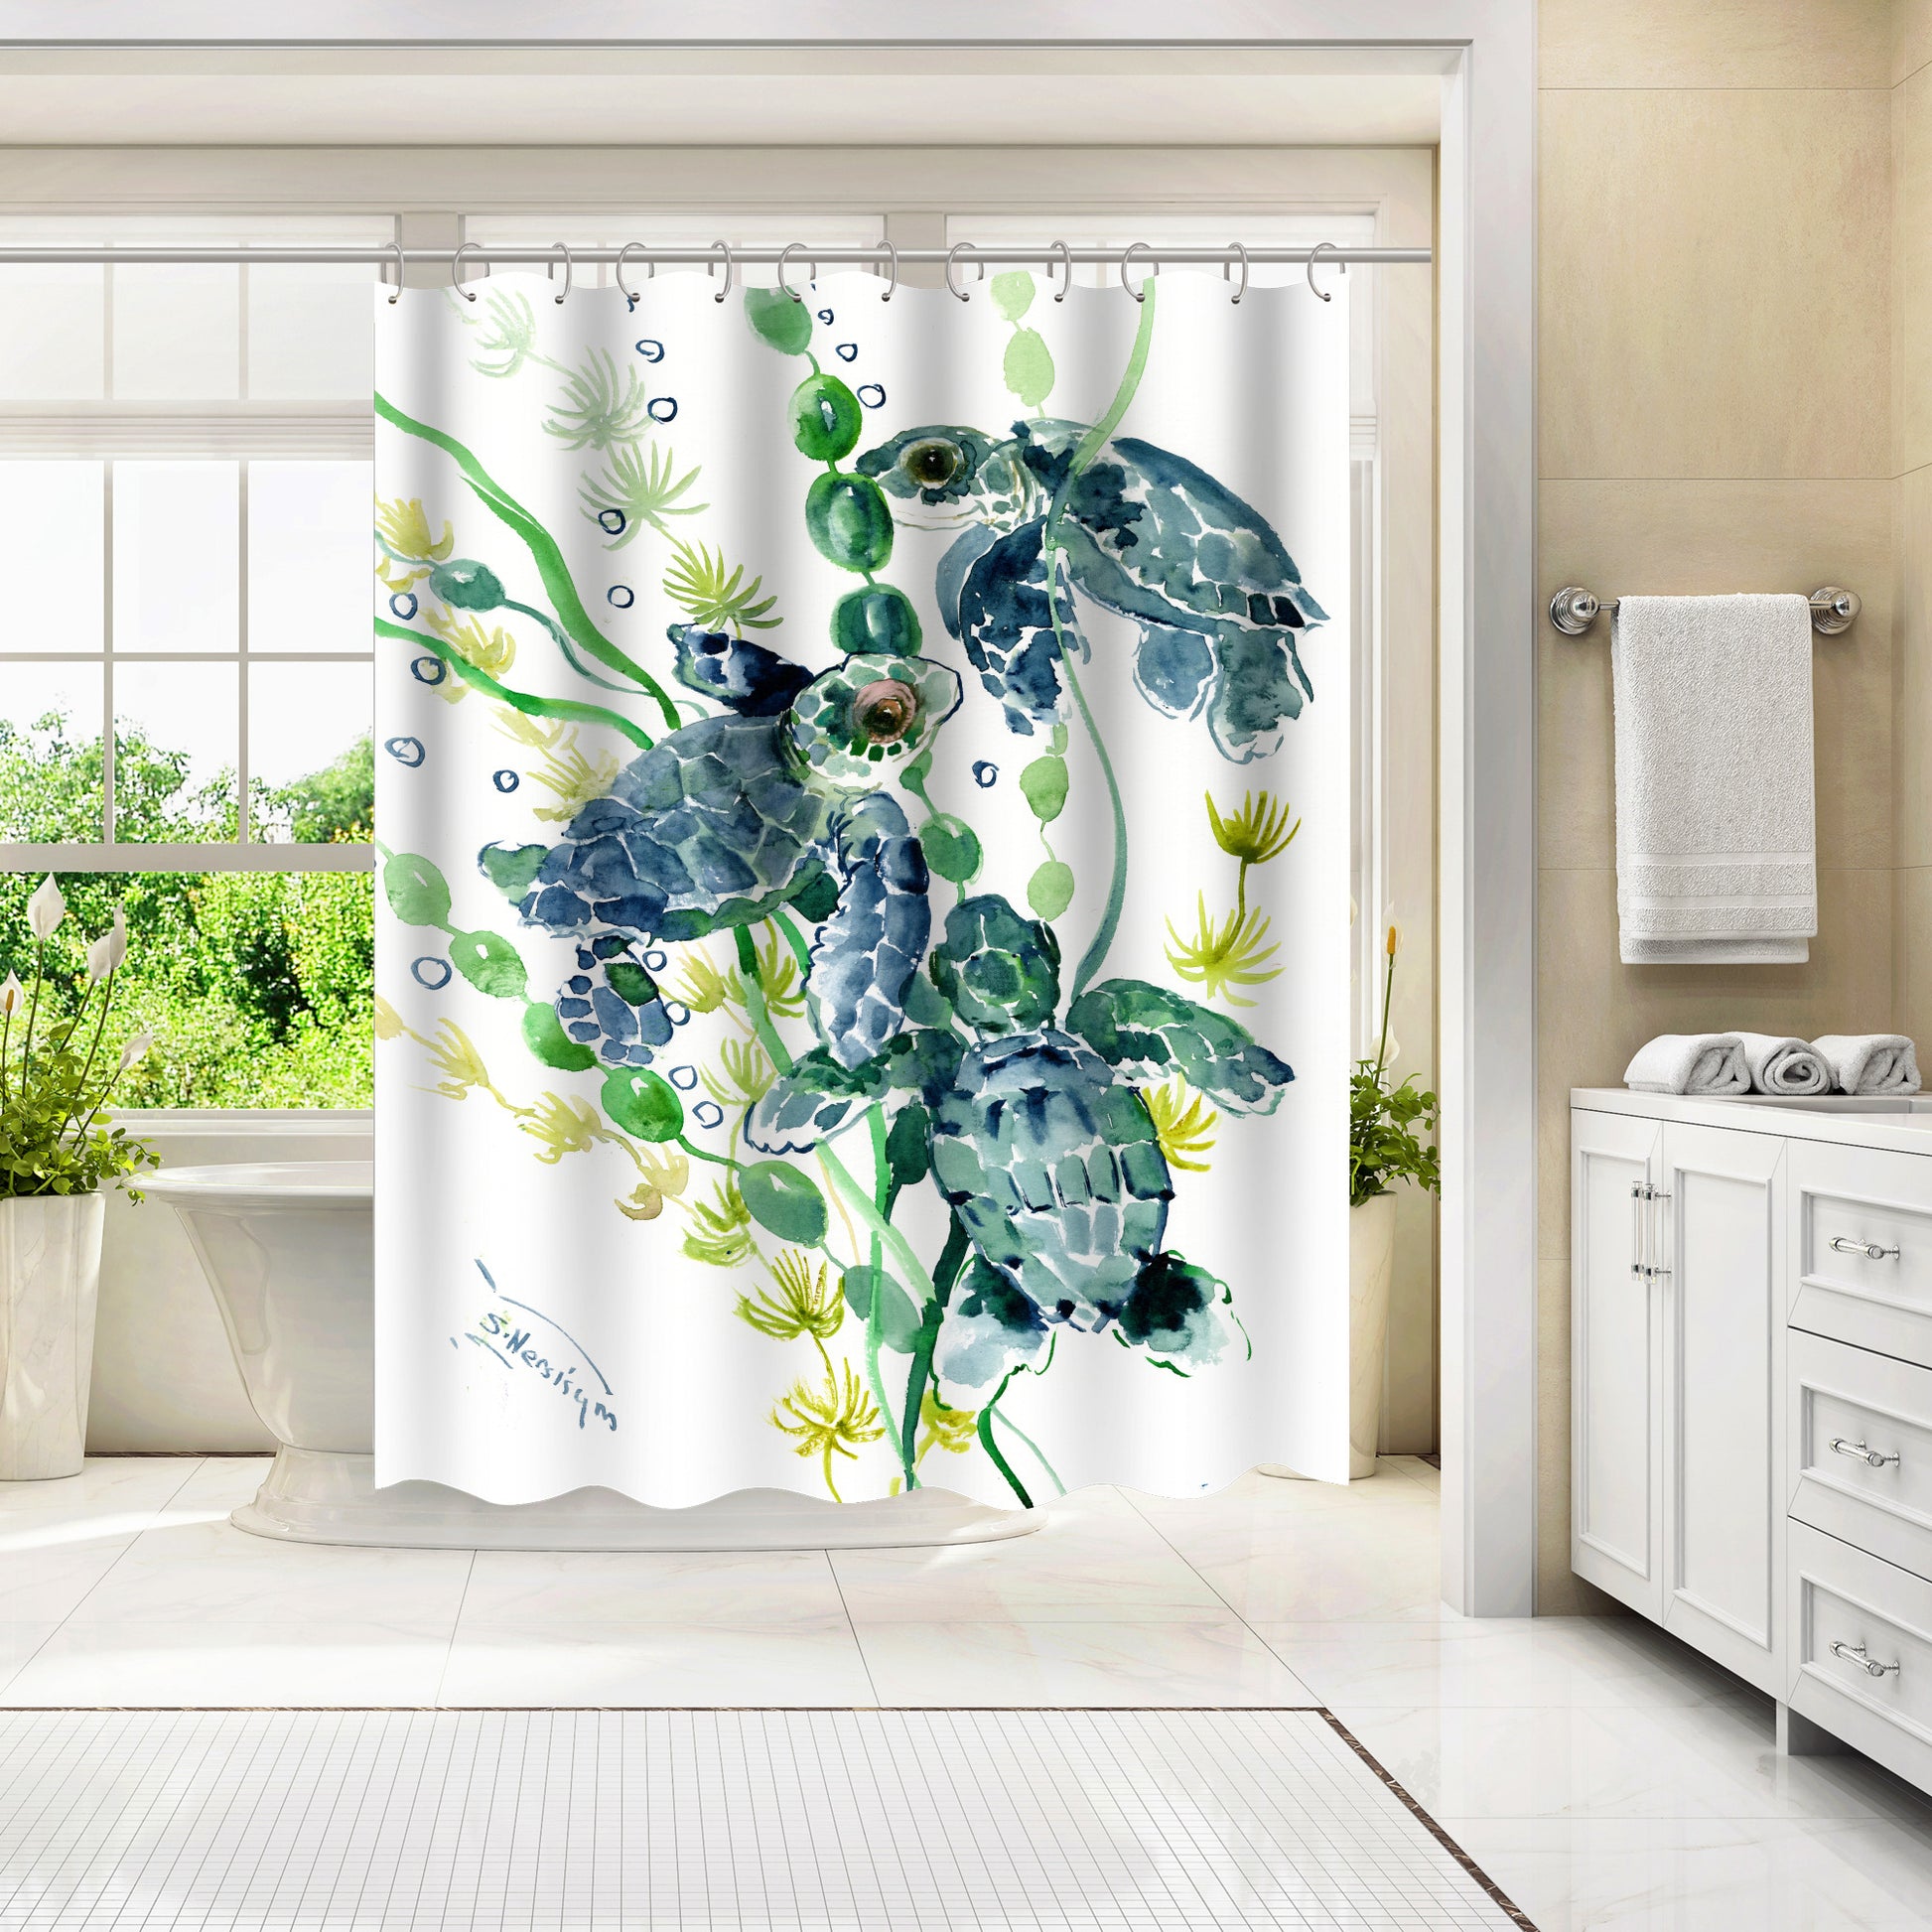 Htooq Sea Turtles Shower Curtain Hooks Rings For Bathroom, Silver Metal Shower Curtain Hanger,rust Proof Clip, Decorative Bath Room Accessories Set,tr